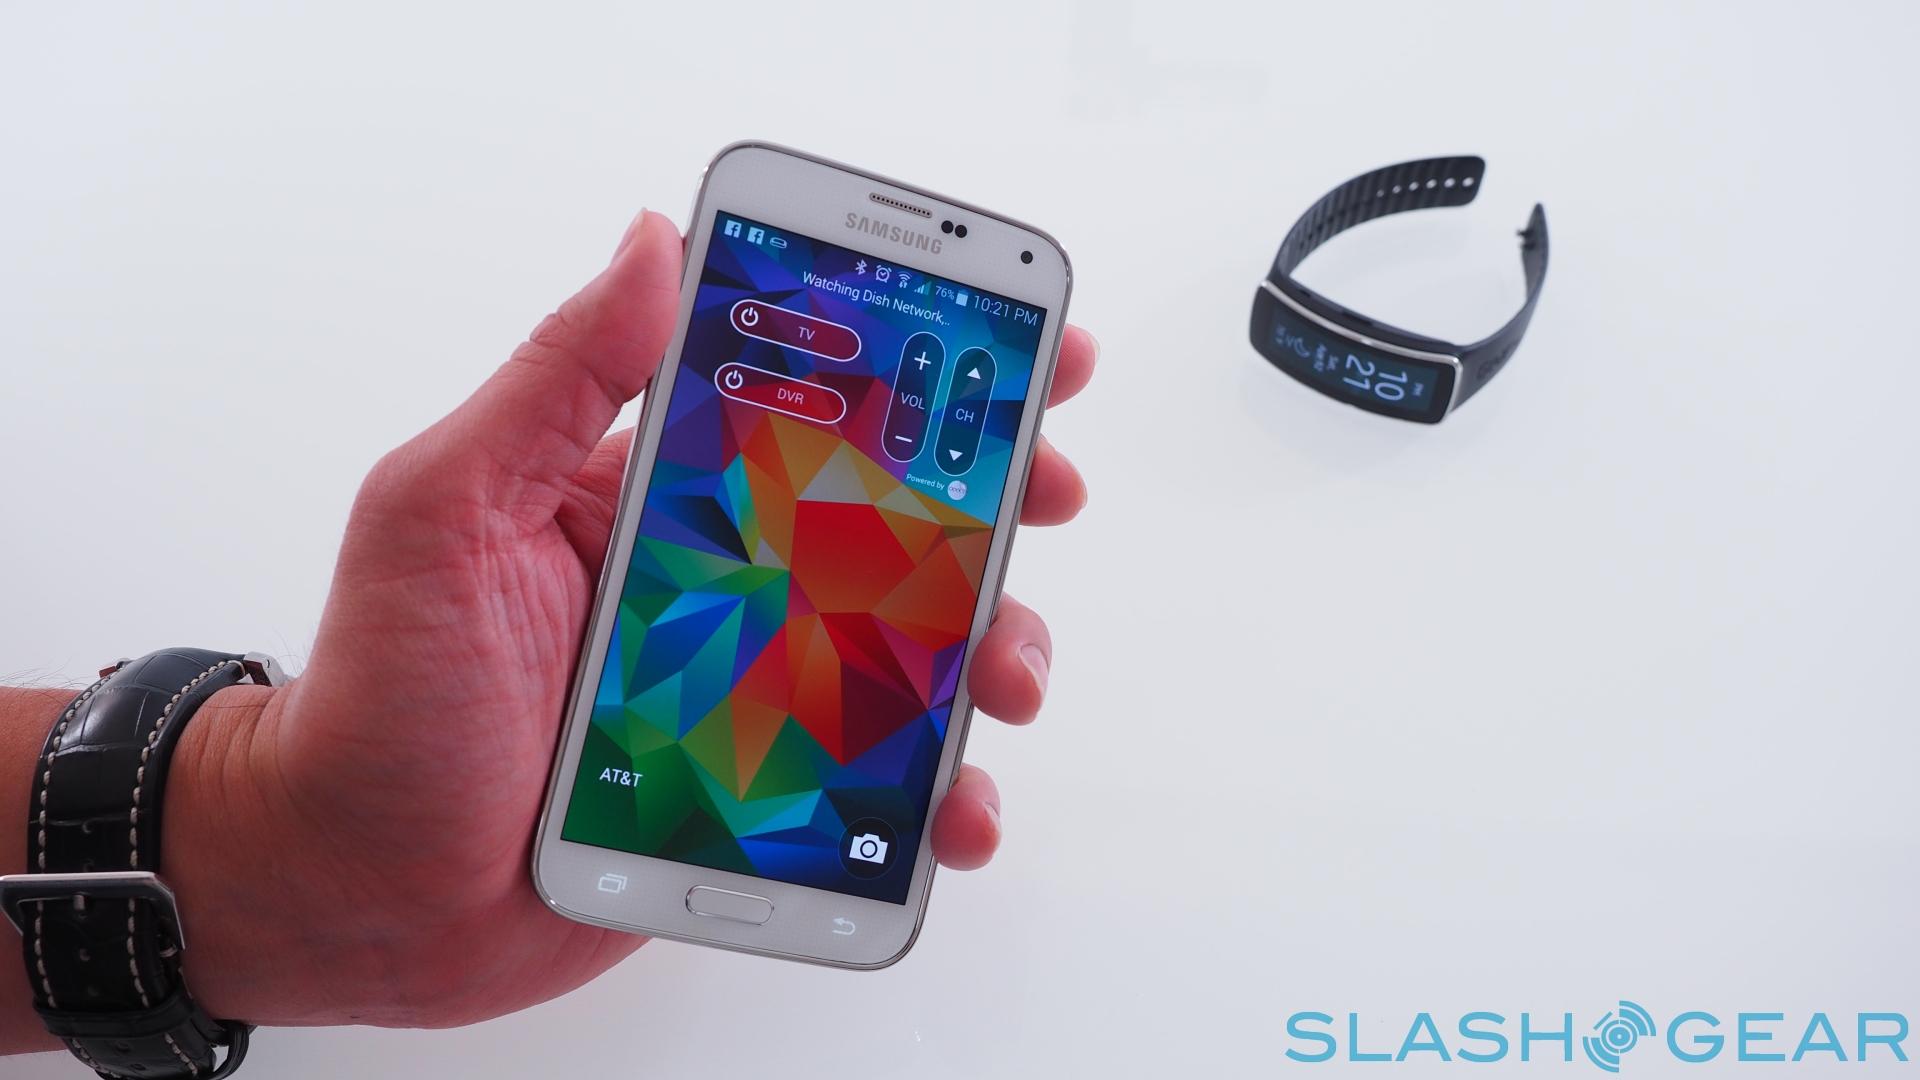 optellen beweging Product Samsung Galaxy S5 Review - SlashGear